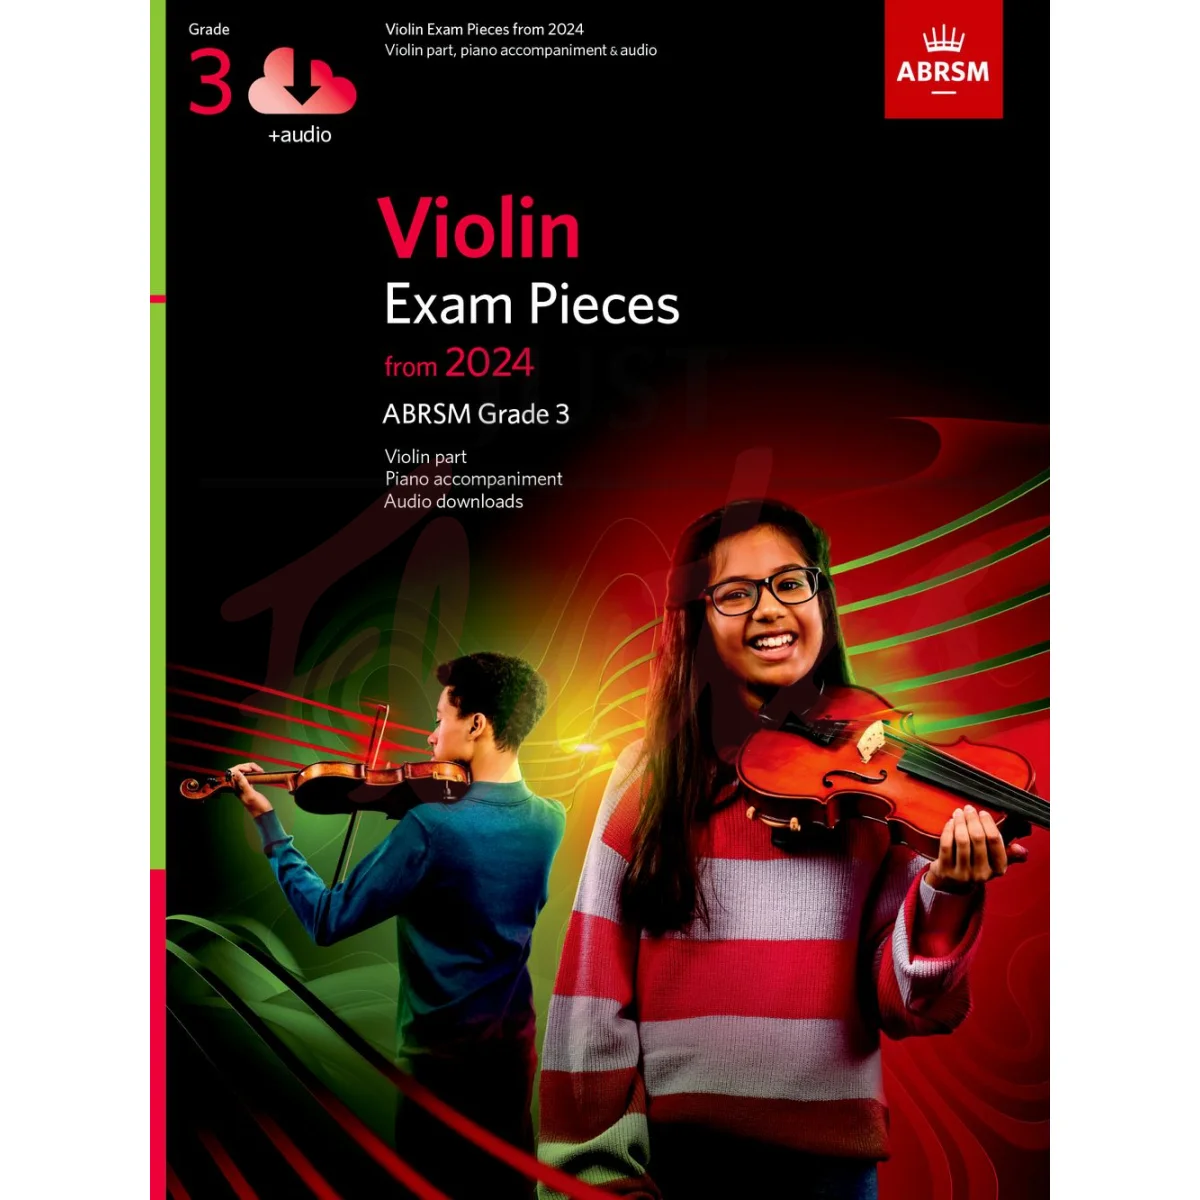 Violin Exam Pieces from 2024, Grade 3